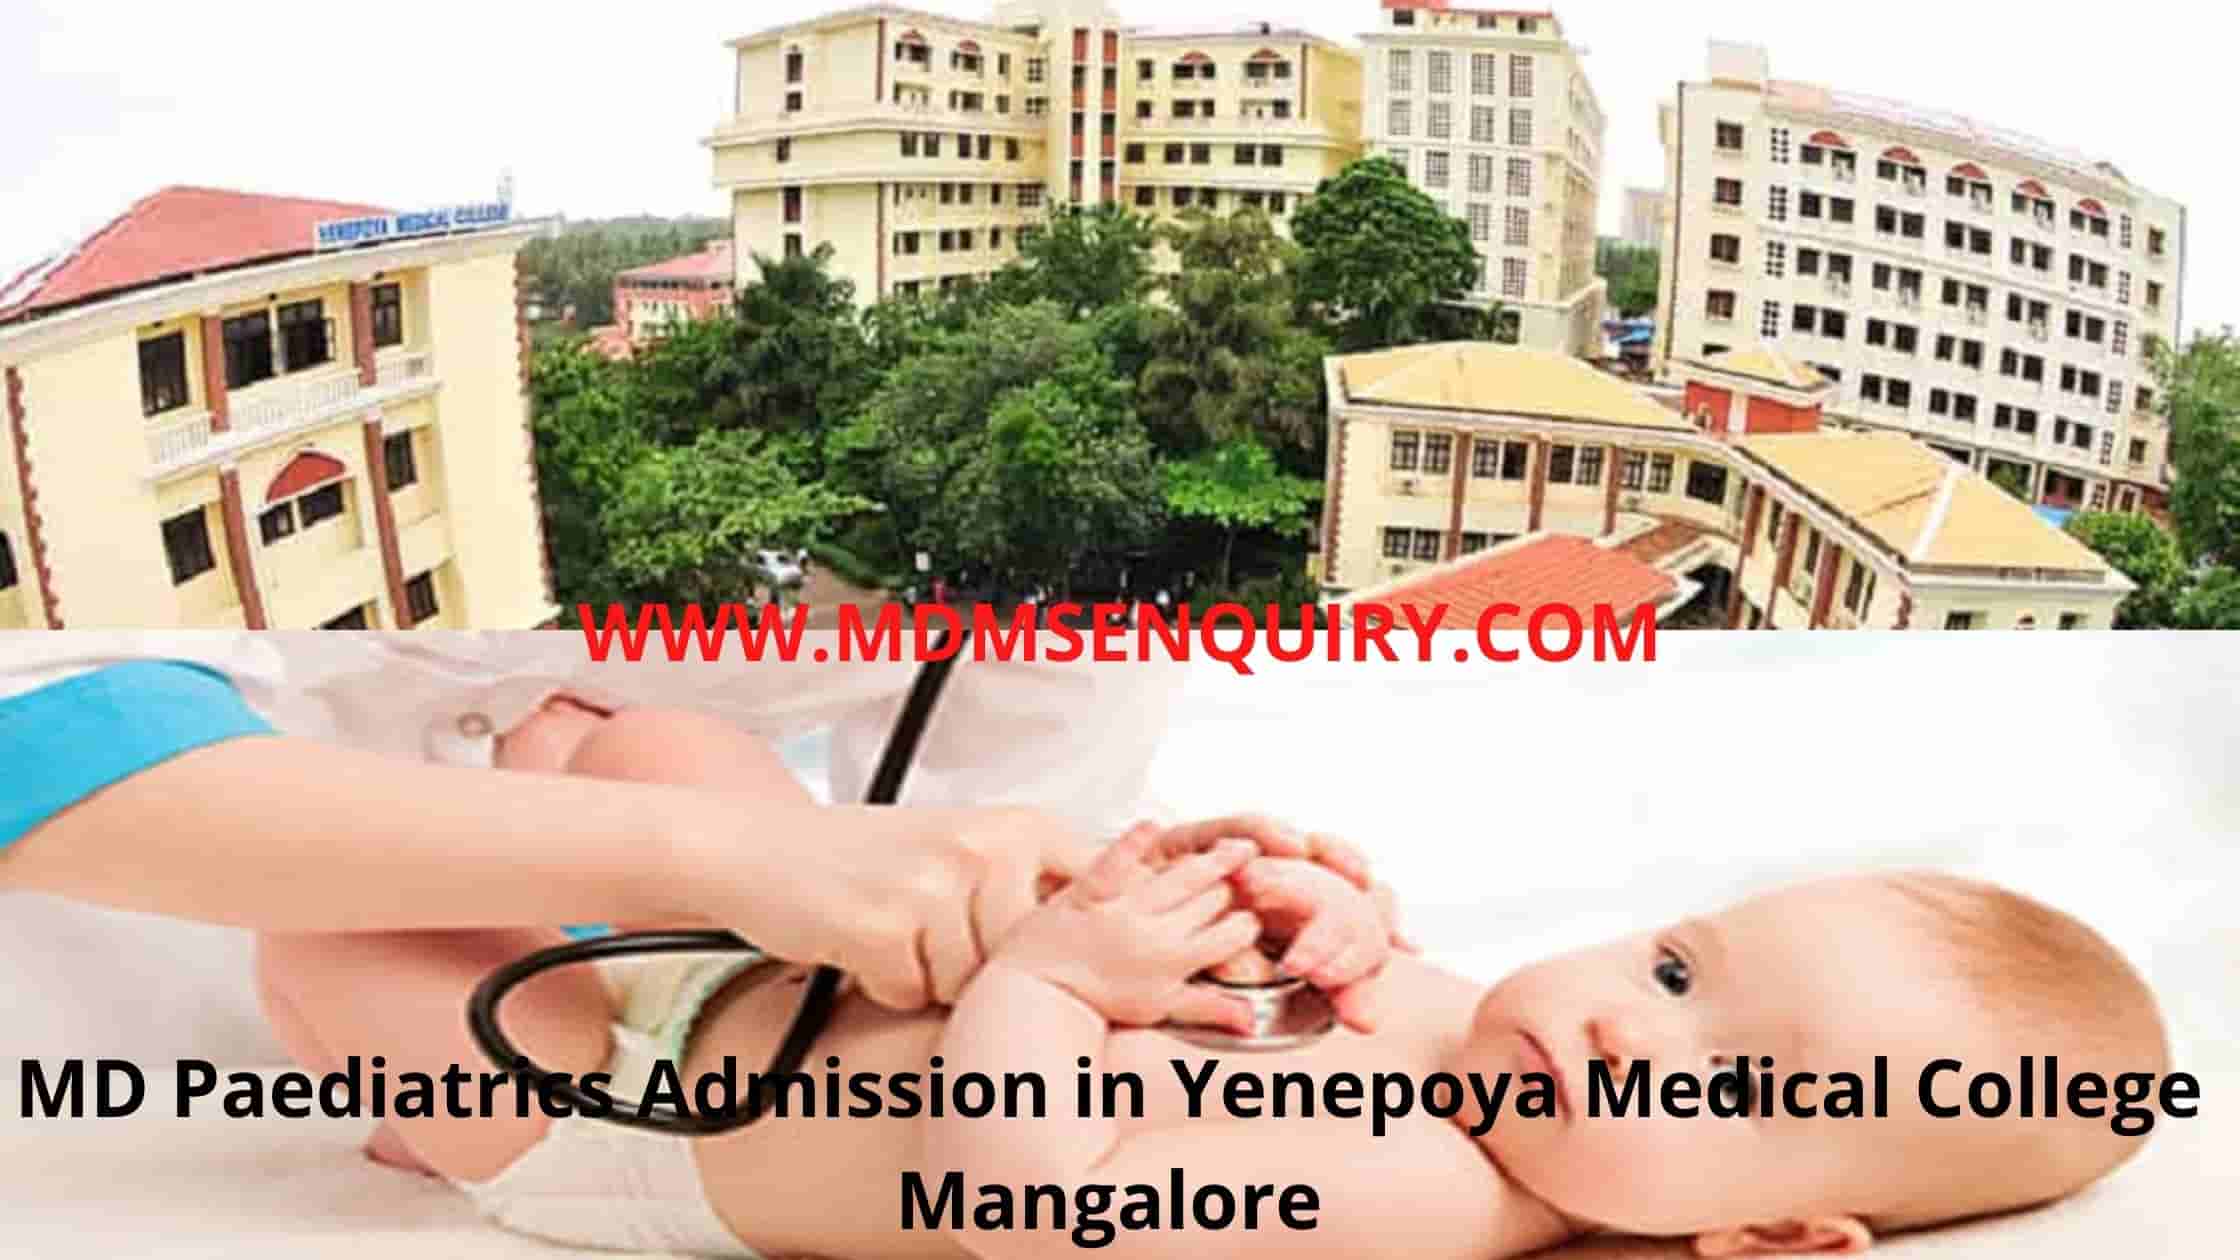 MD Paediatrics Admission in Yenepoya Medical College Mangalore